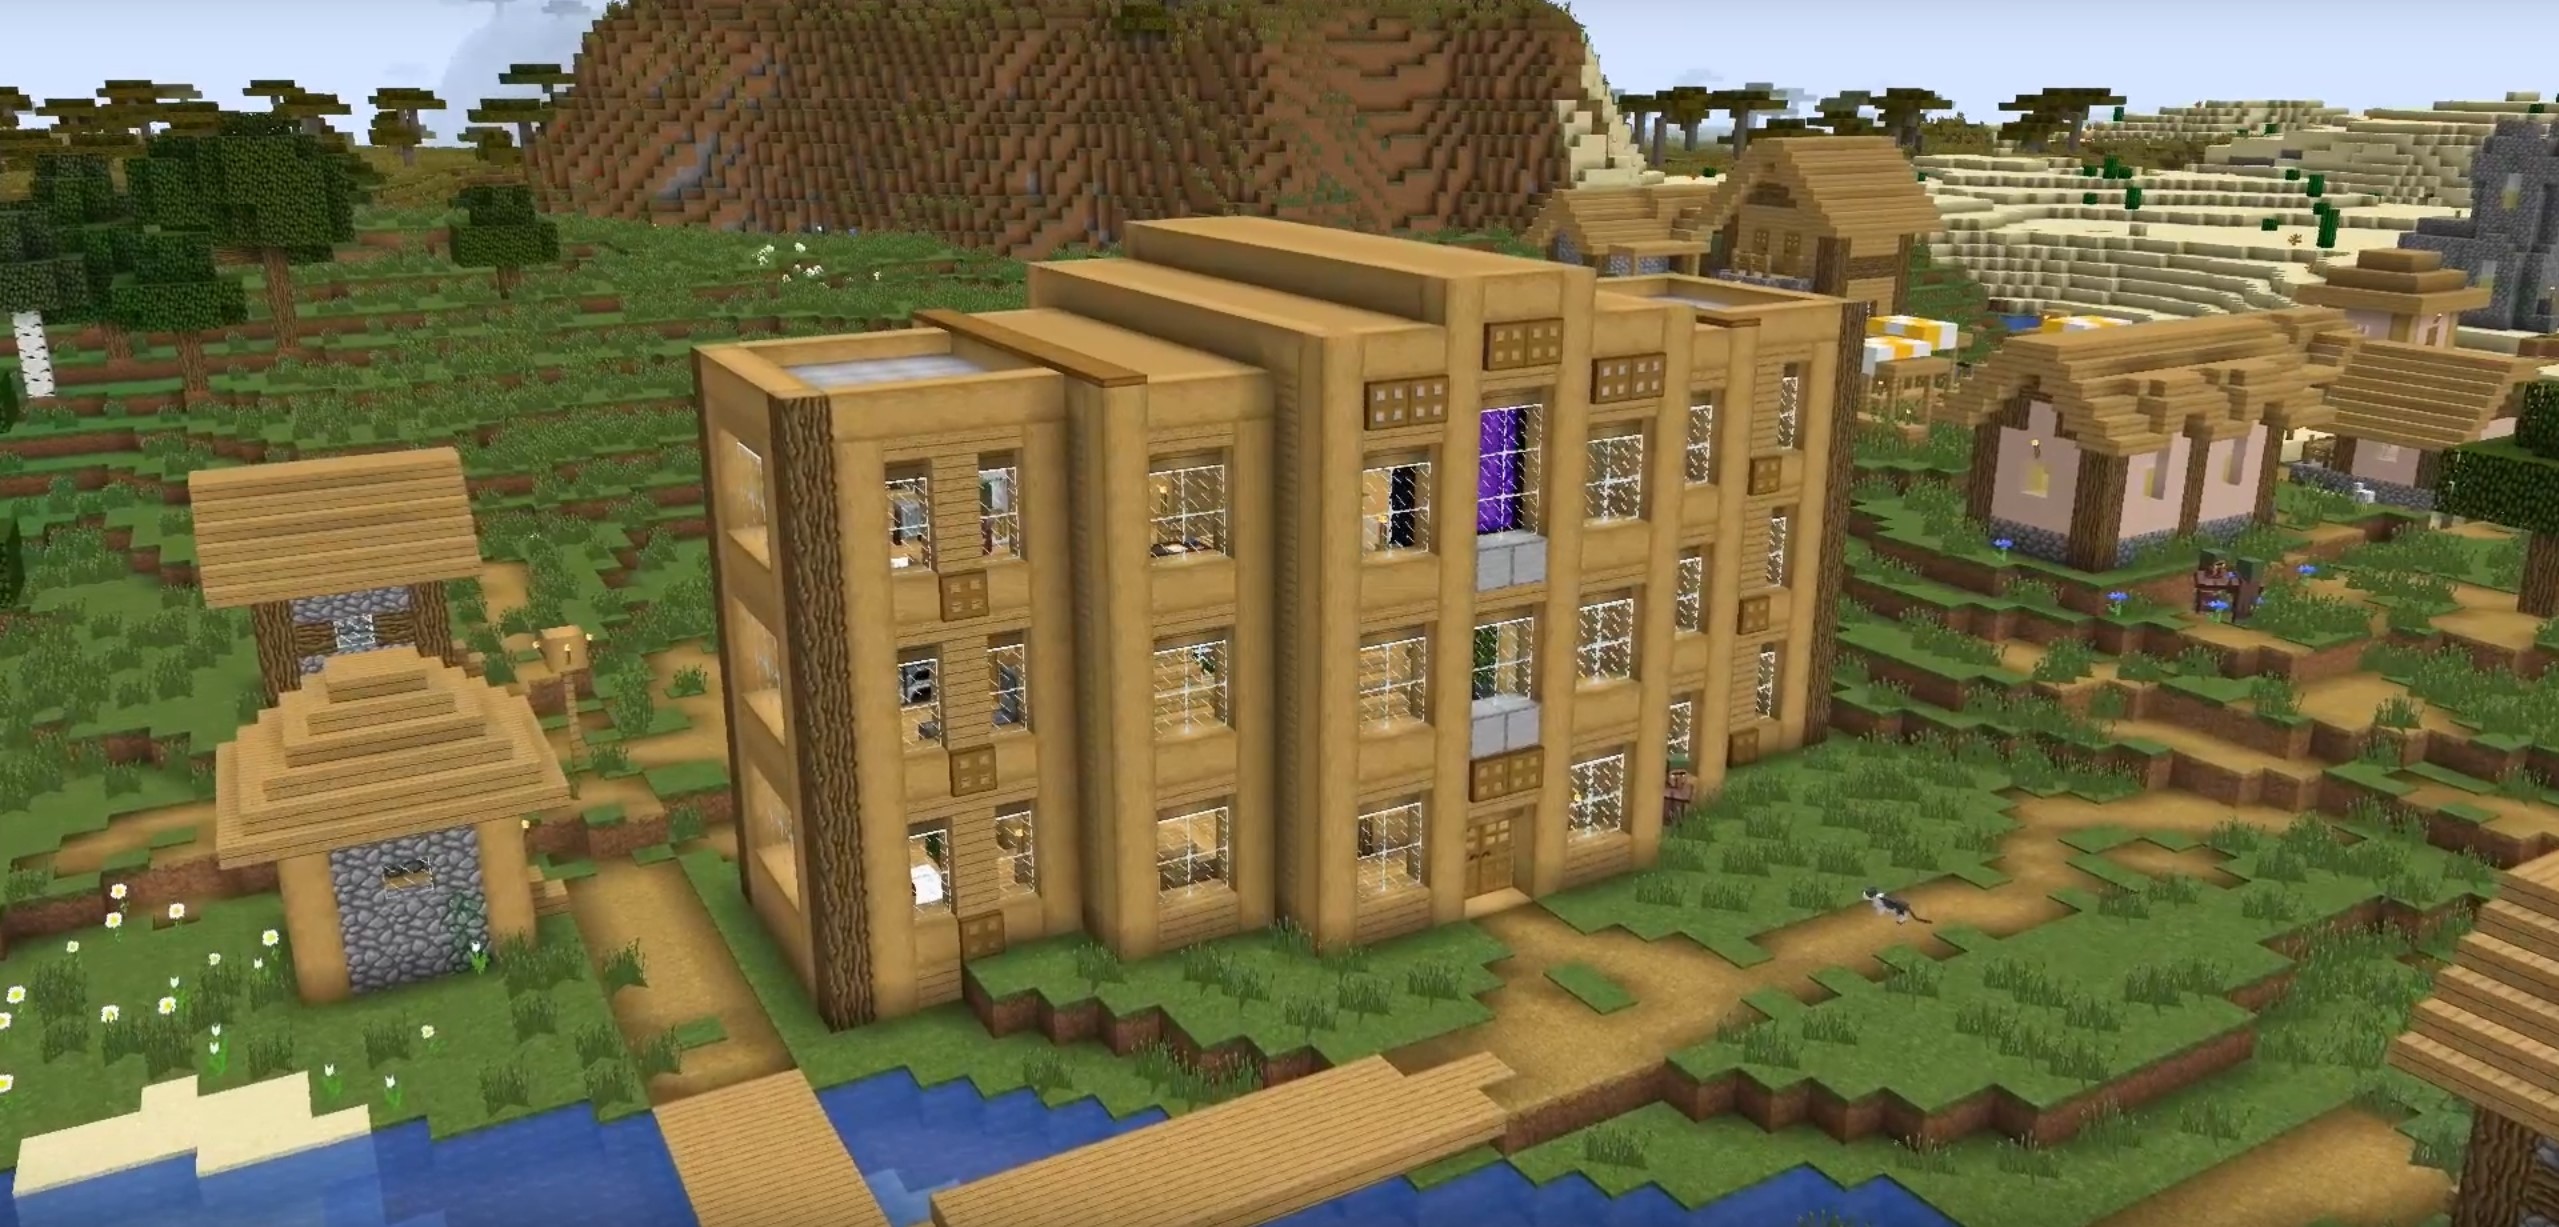 Minecraft Villager Hotel Survival Base idea